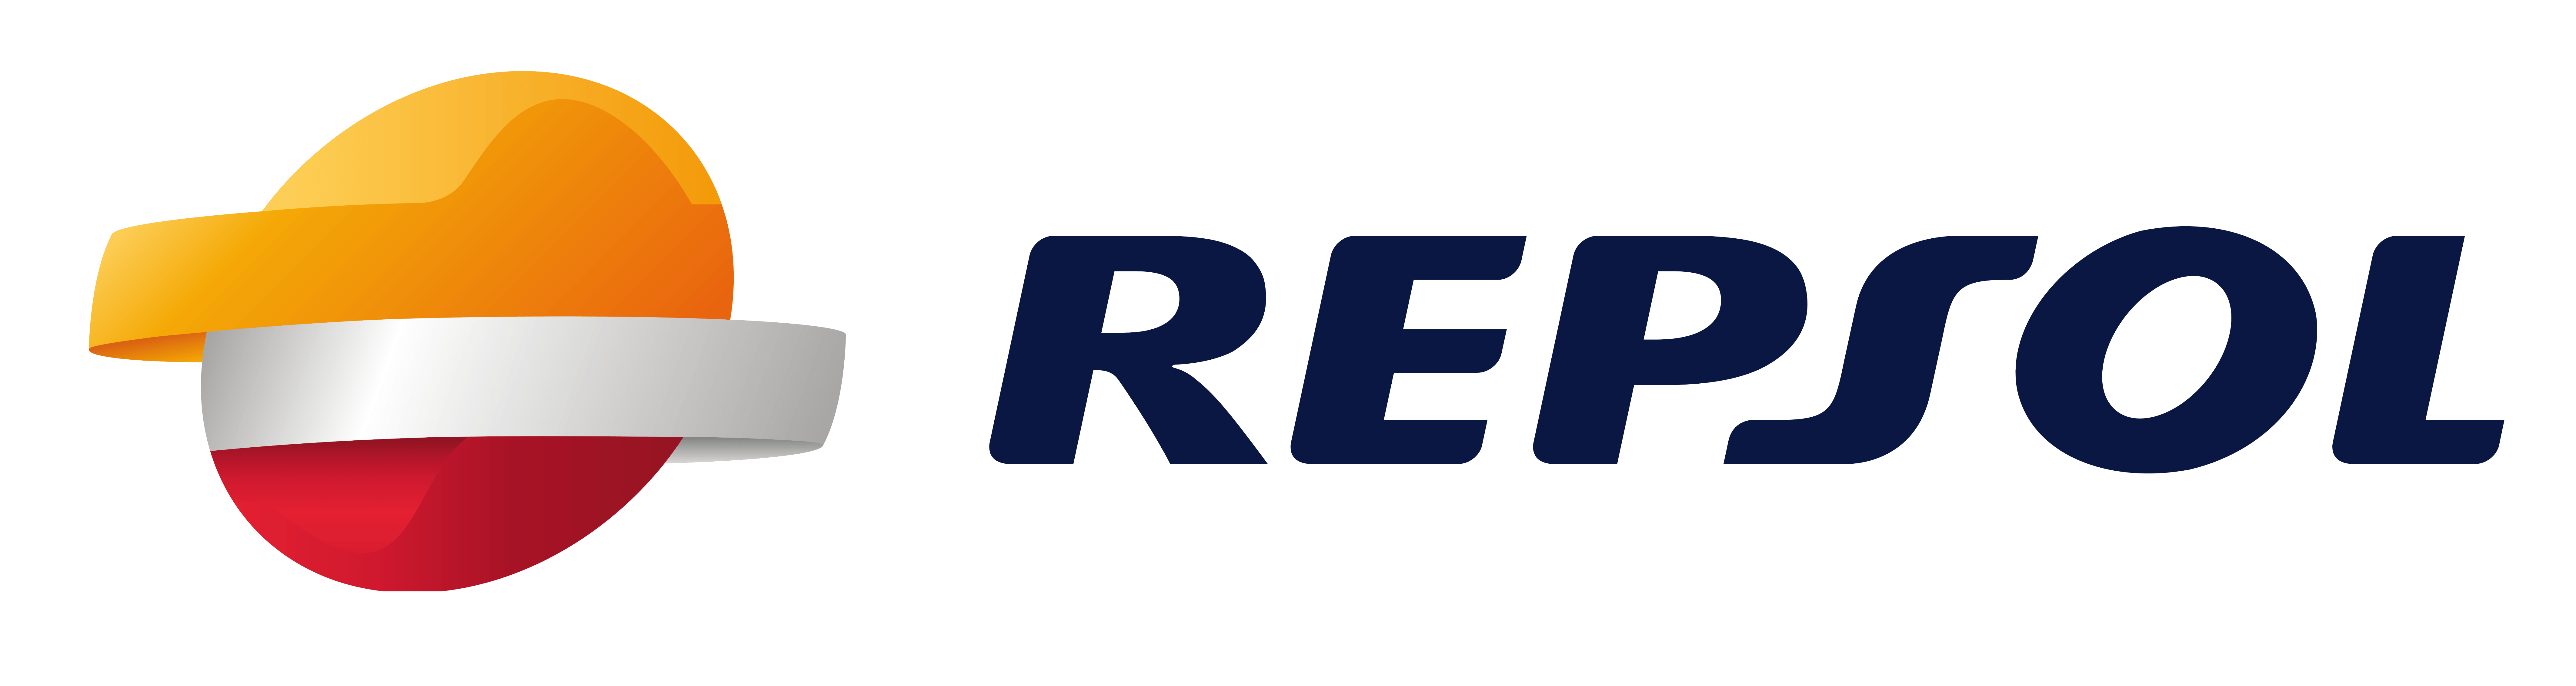 Repsol Logo - Repsol – Logos Download